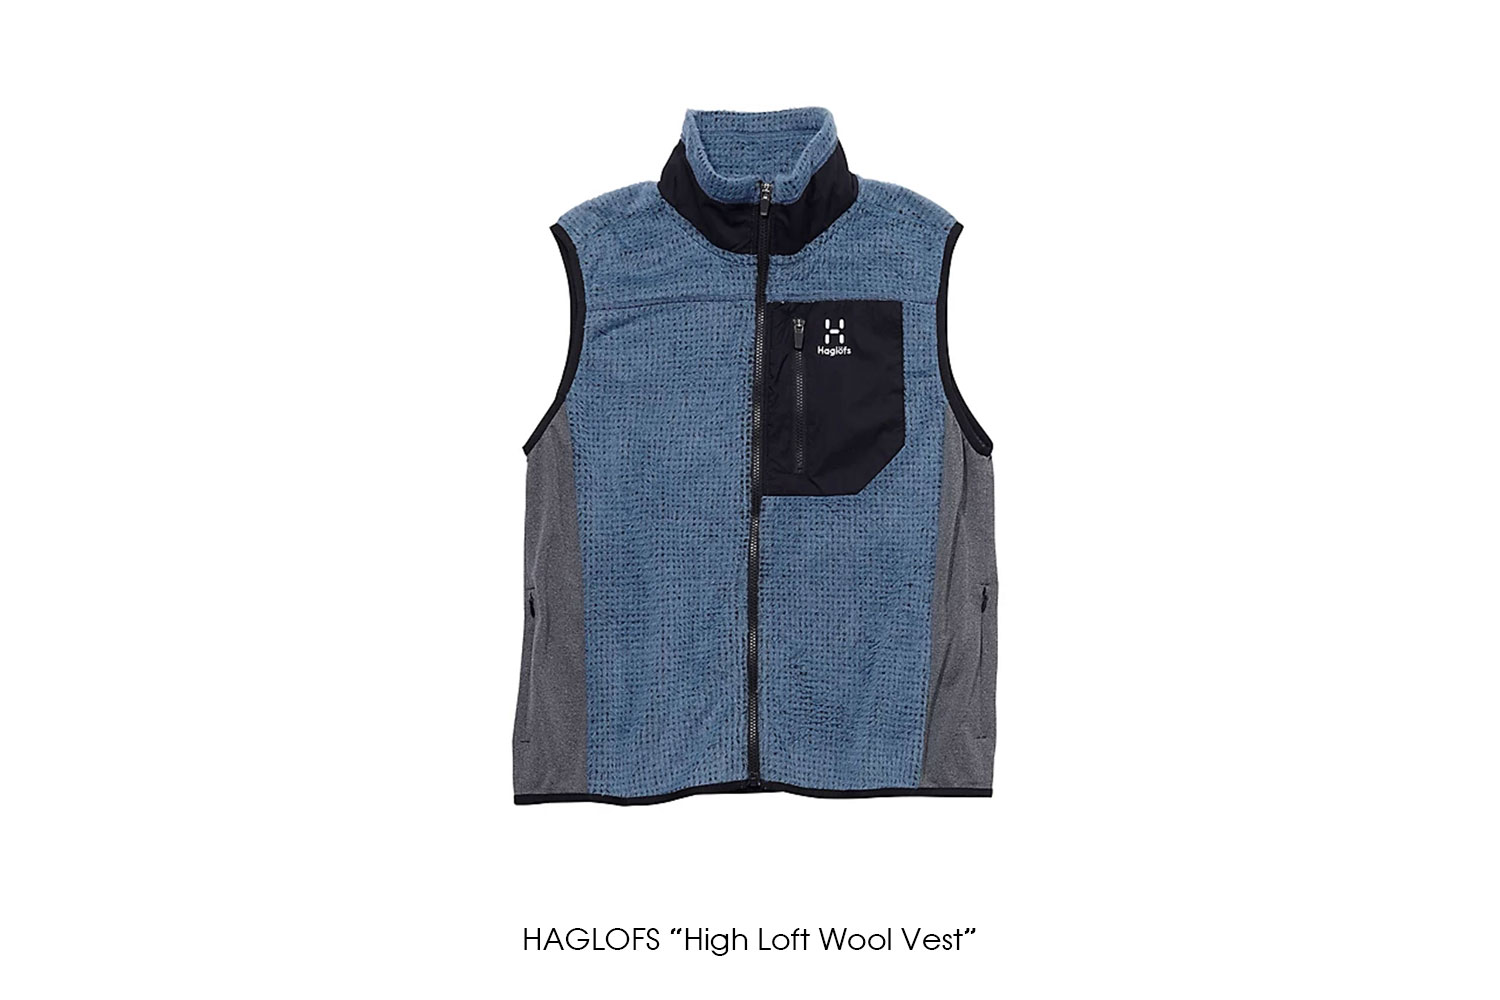 HAGLOFS "High Loft Wool Vest"